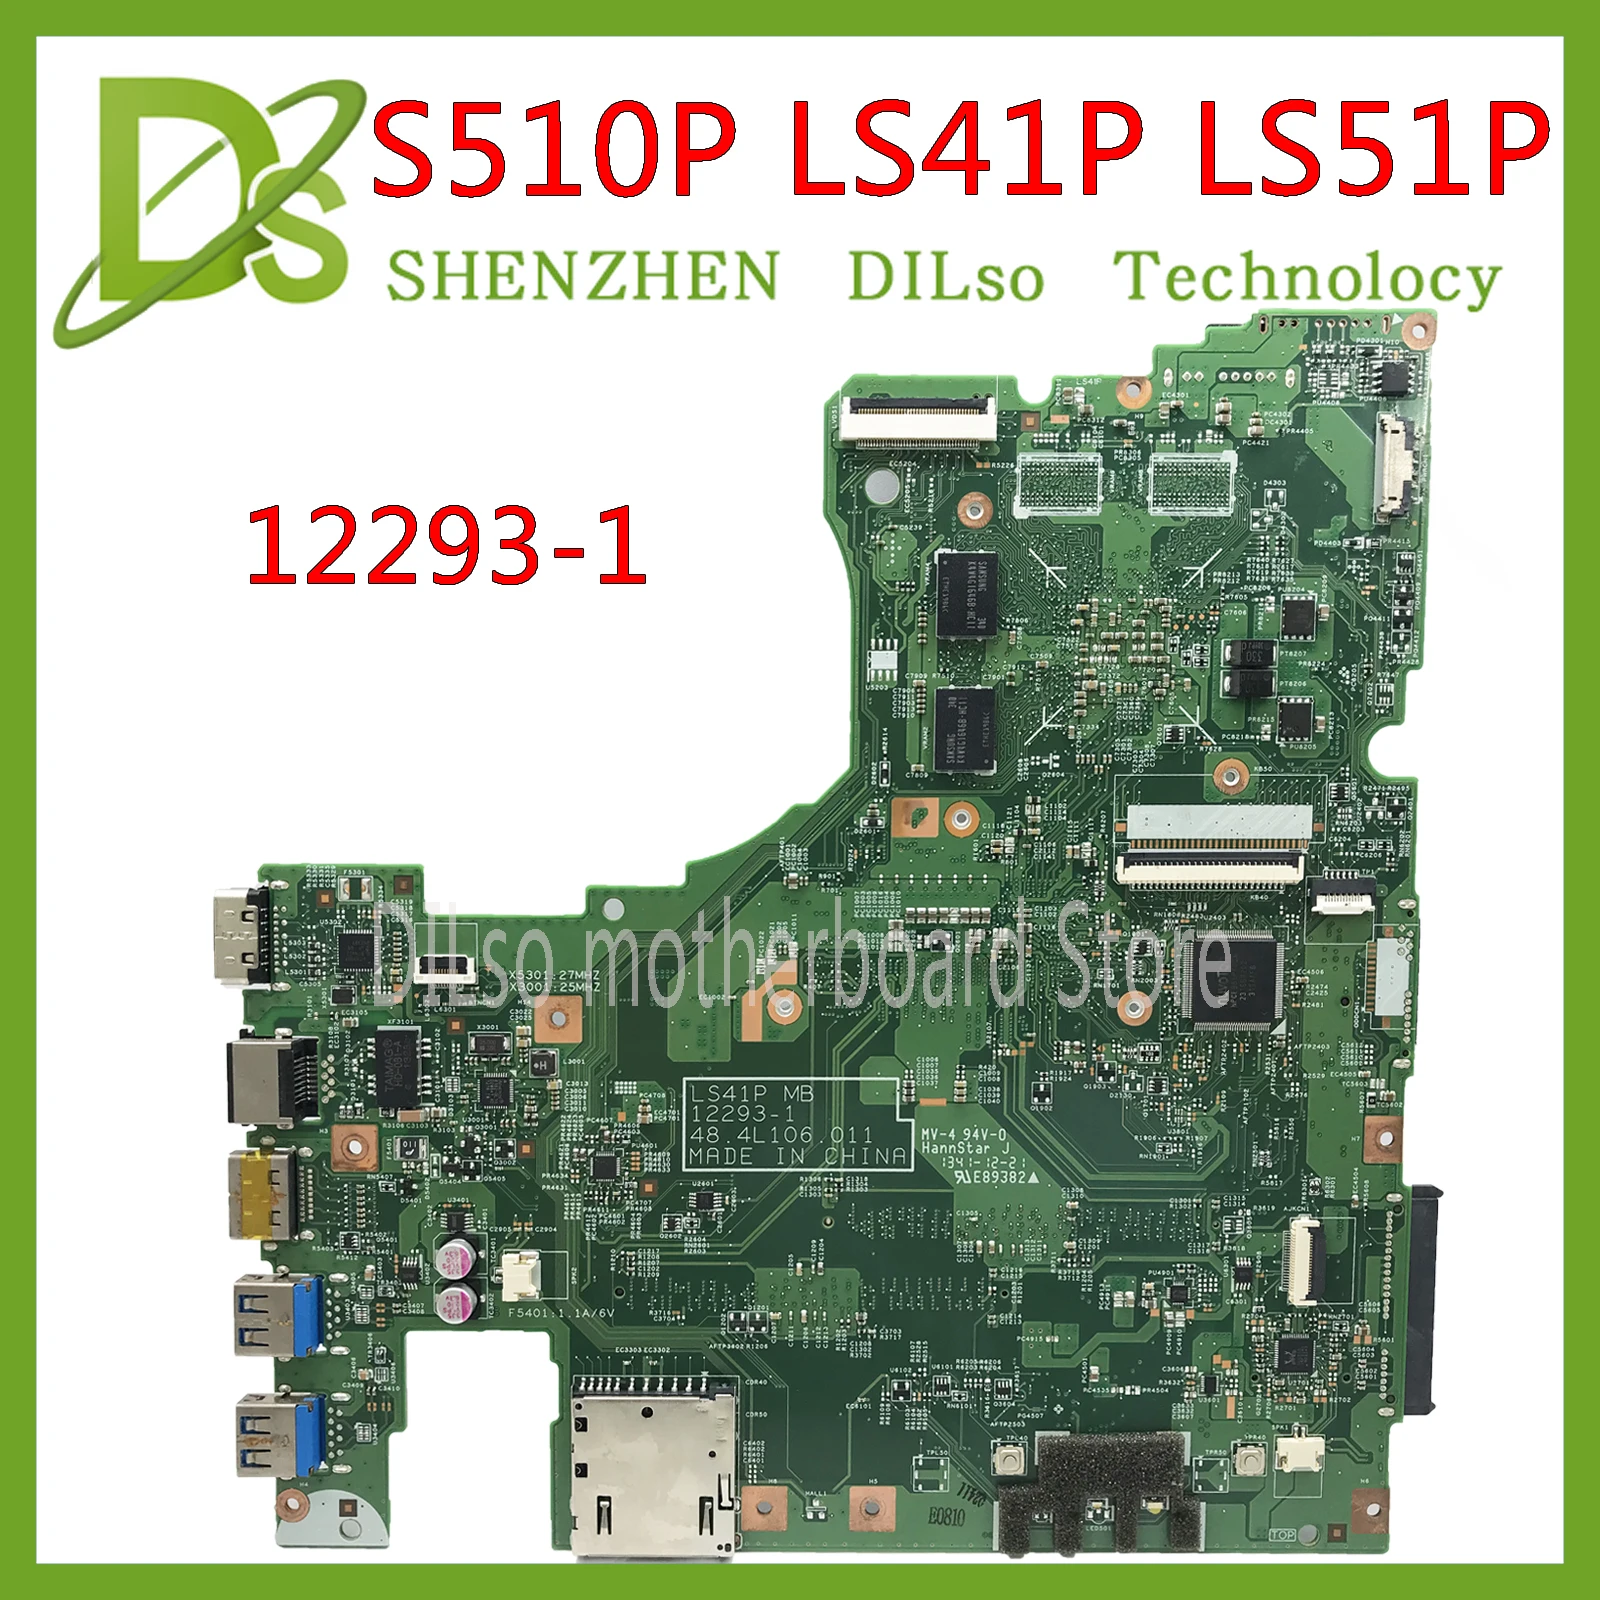 90% OFF  KEFU 12293-1 48.4L106.011 motherboard for Lenovo S510P LS41P LS51P motherboard I5-4200U CPU GT720M-